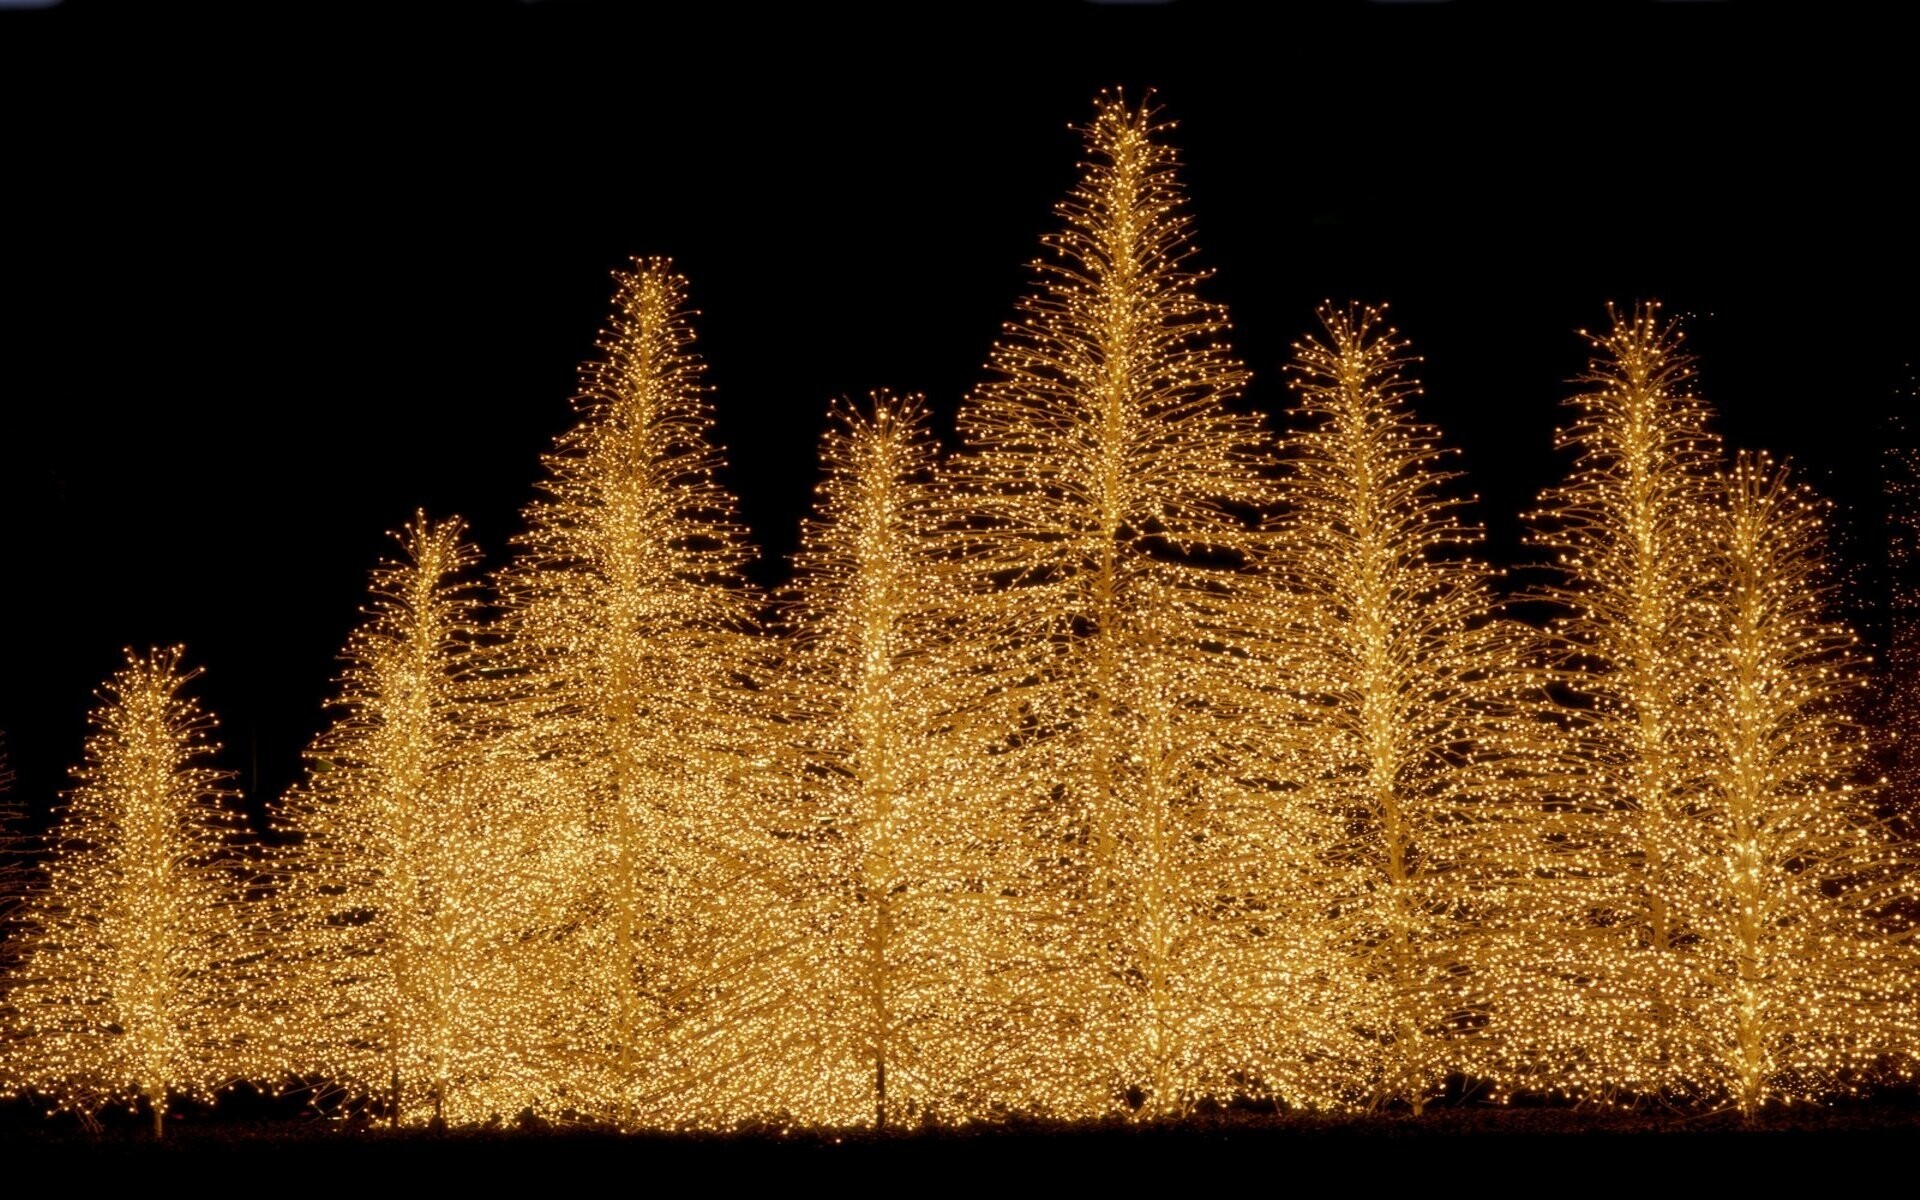 Gold Lights: Bushy golden Christmas trees, Decorative, Shiny sparkling light and shimmer. 1920x1200 HD Background.